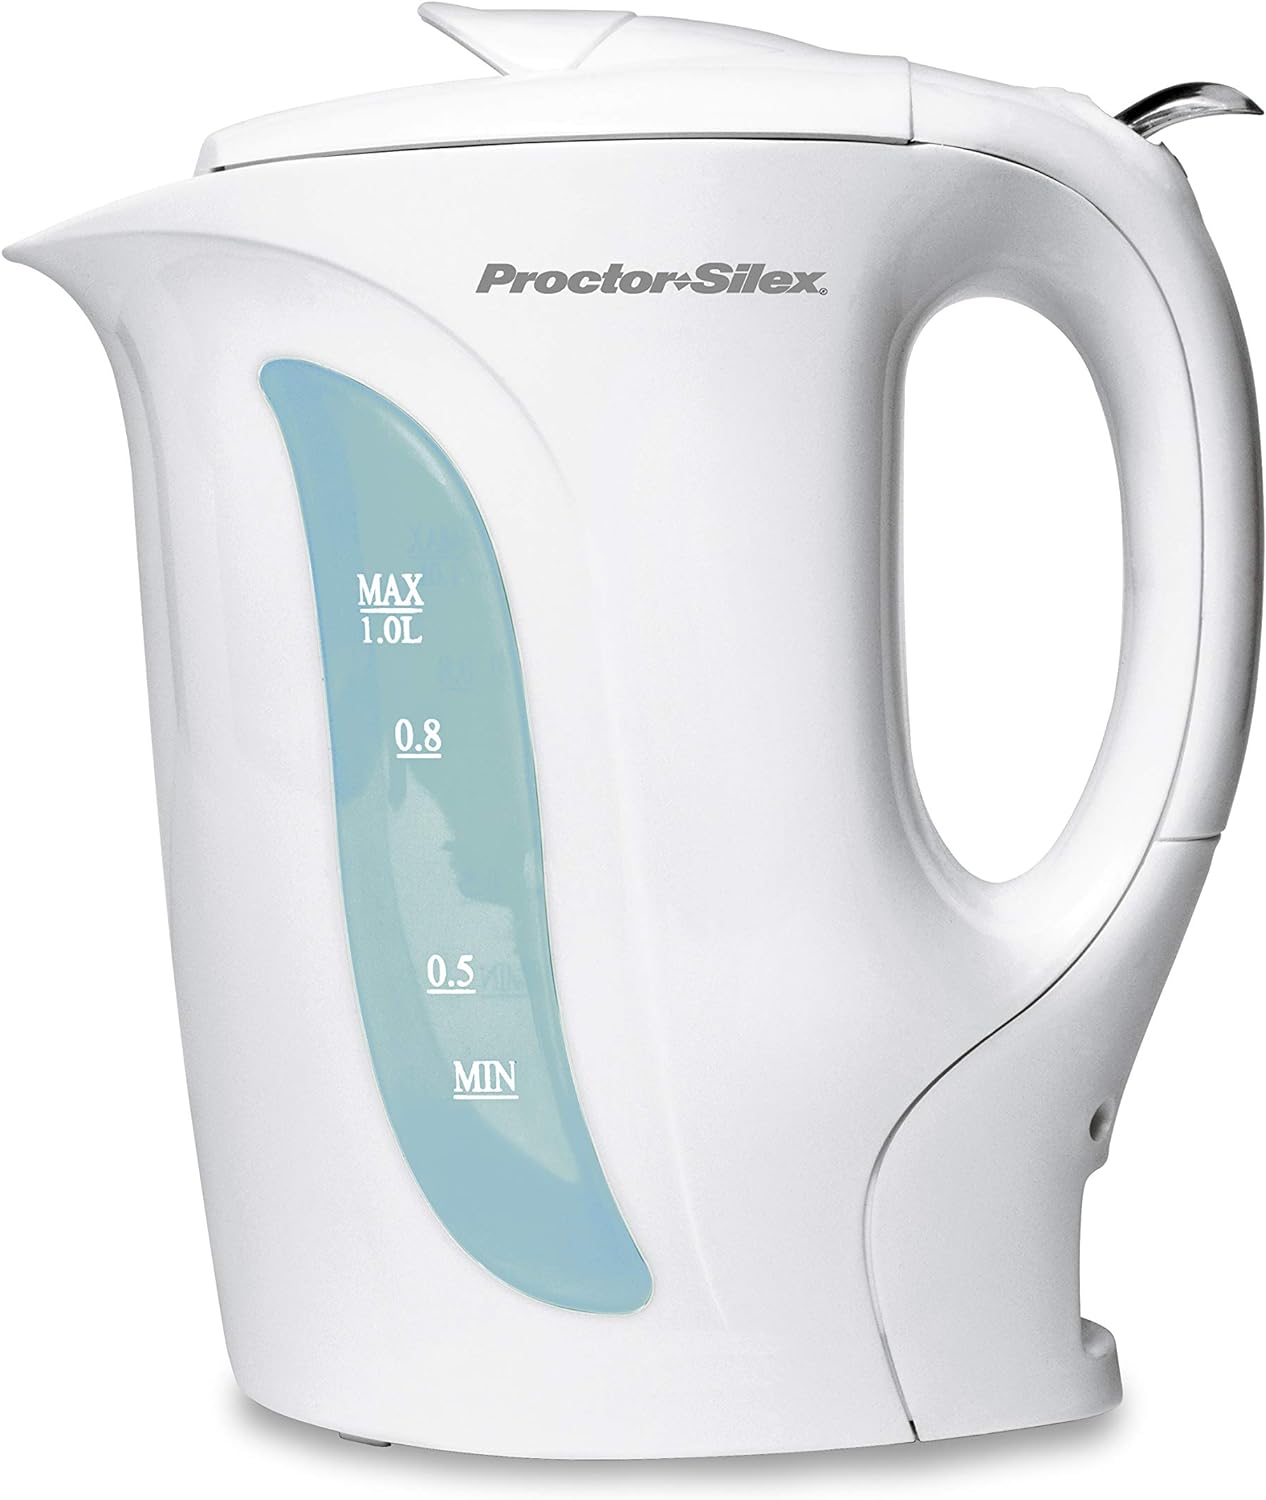 Amazon Com Proctor Silex Electric Tea Kettle Water Boiler